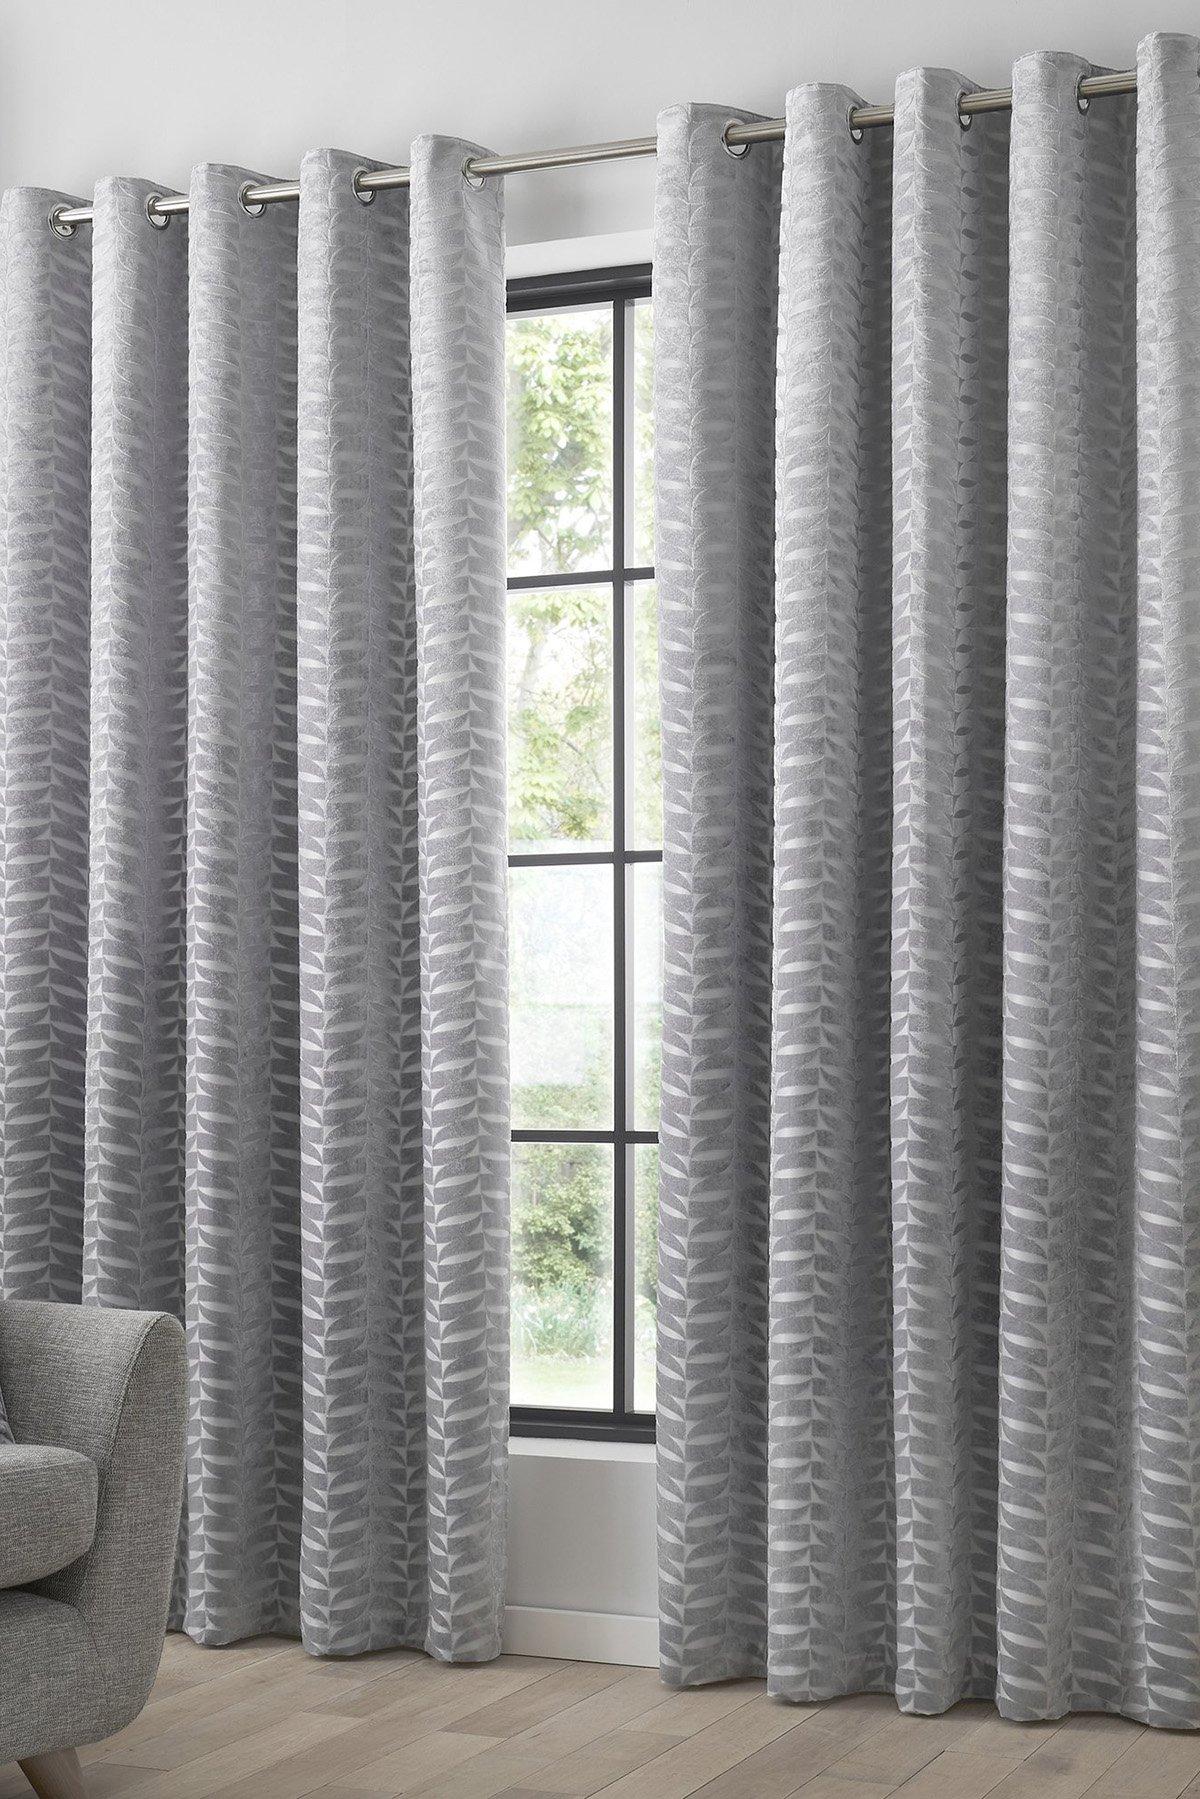 'Kendal' Textured Weave Pair of Eyelet Curtains